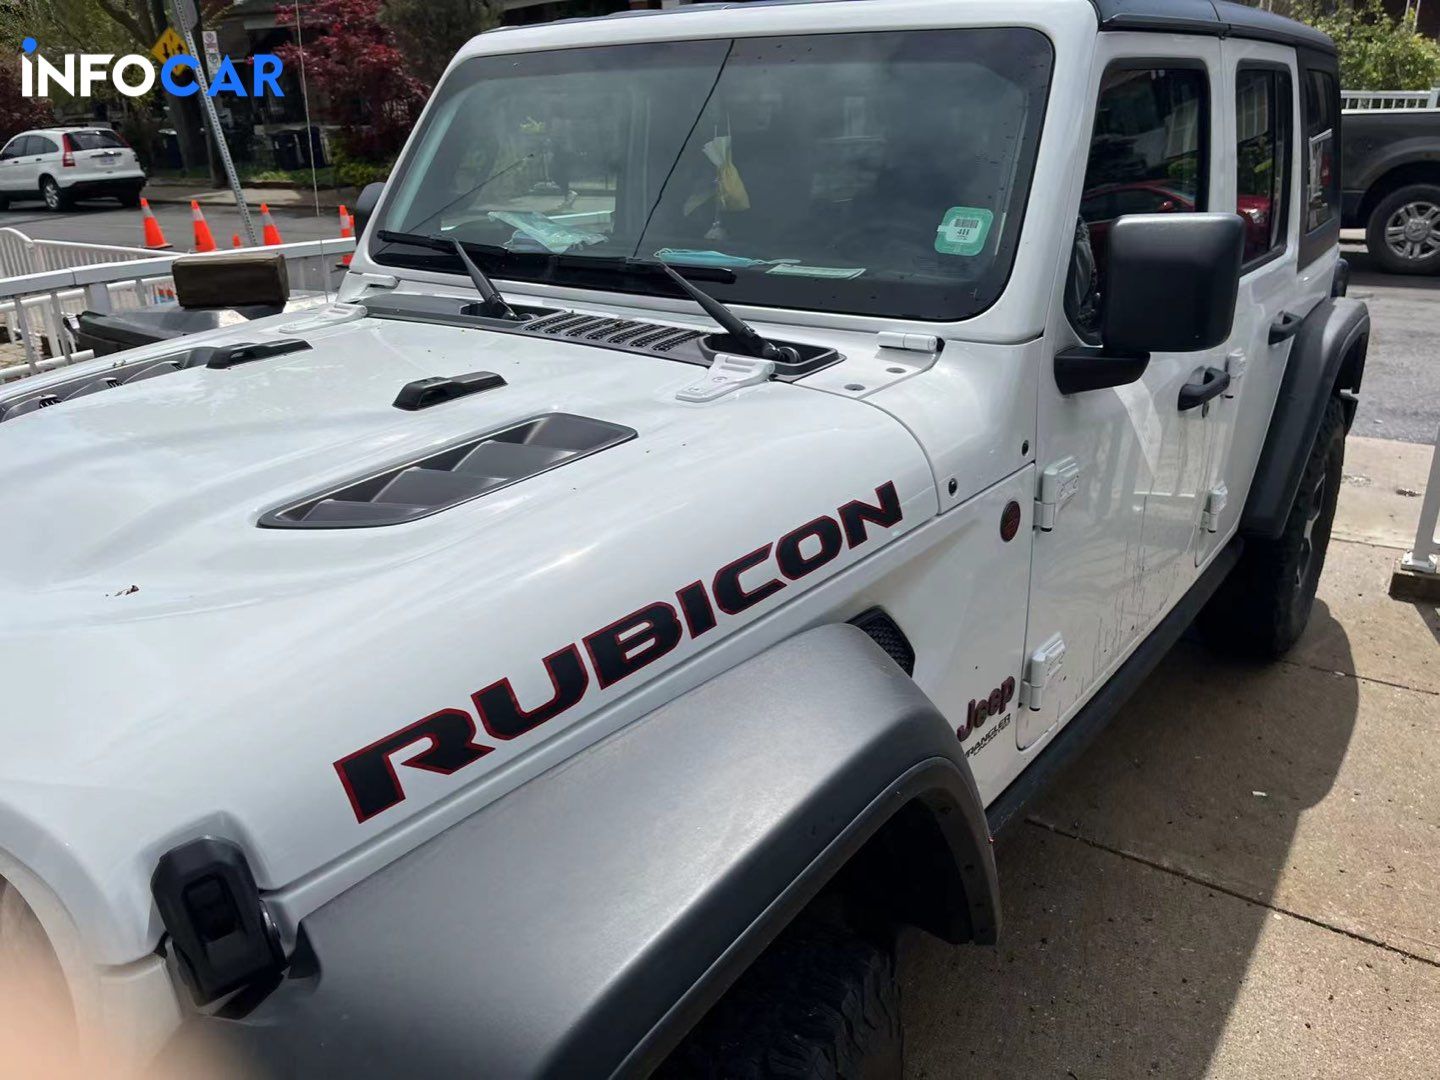 2022 Jeep Wrangler Rubicon - INFOCAR - Toronto Auto Trading Platform